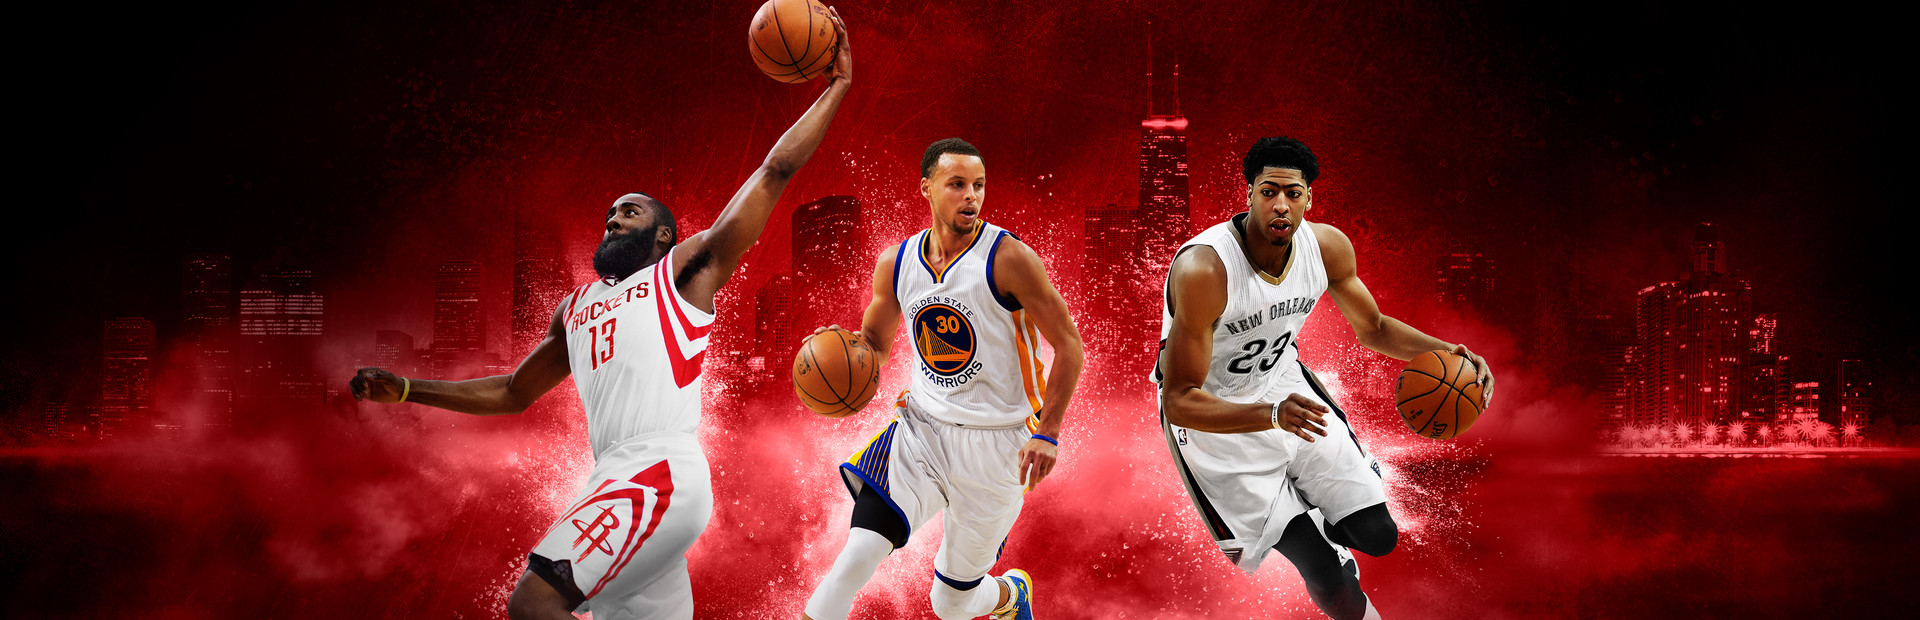 NBA 2K16 cover image